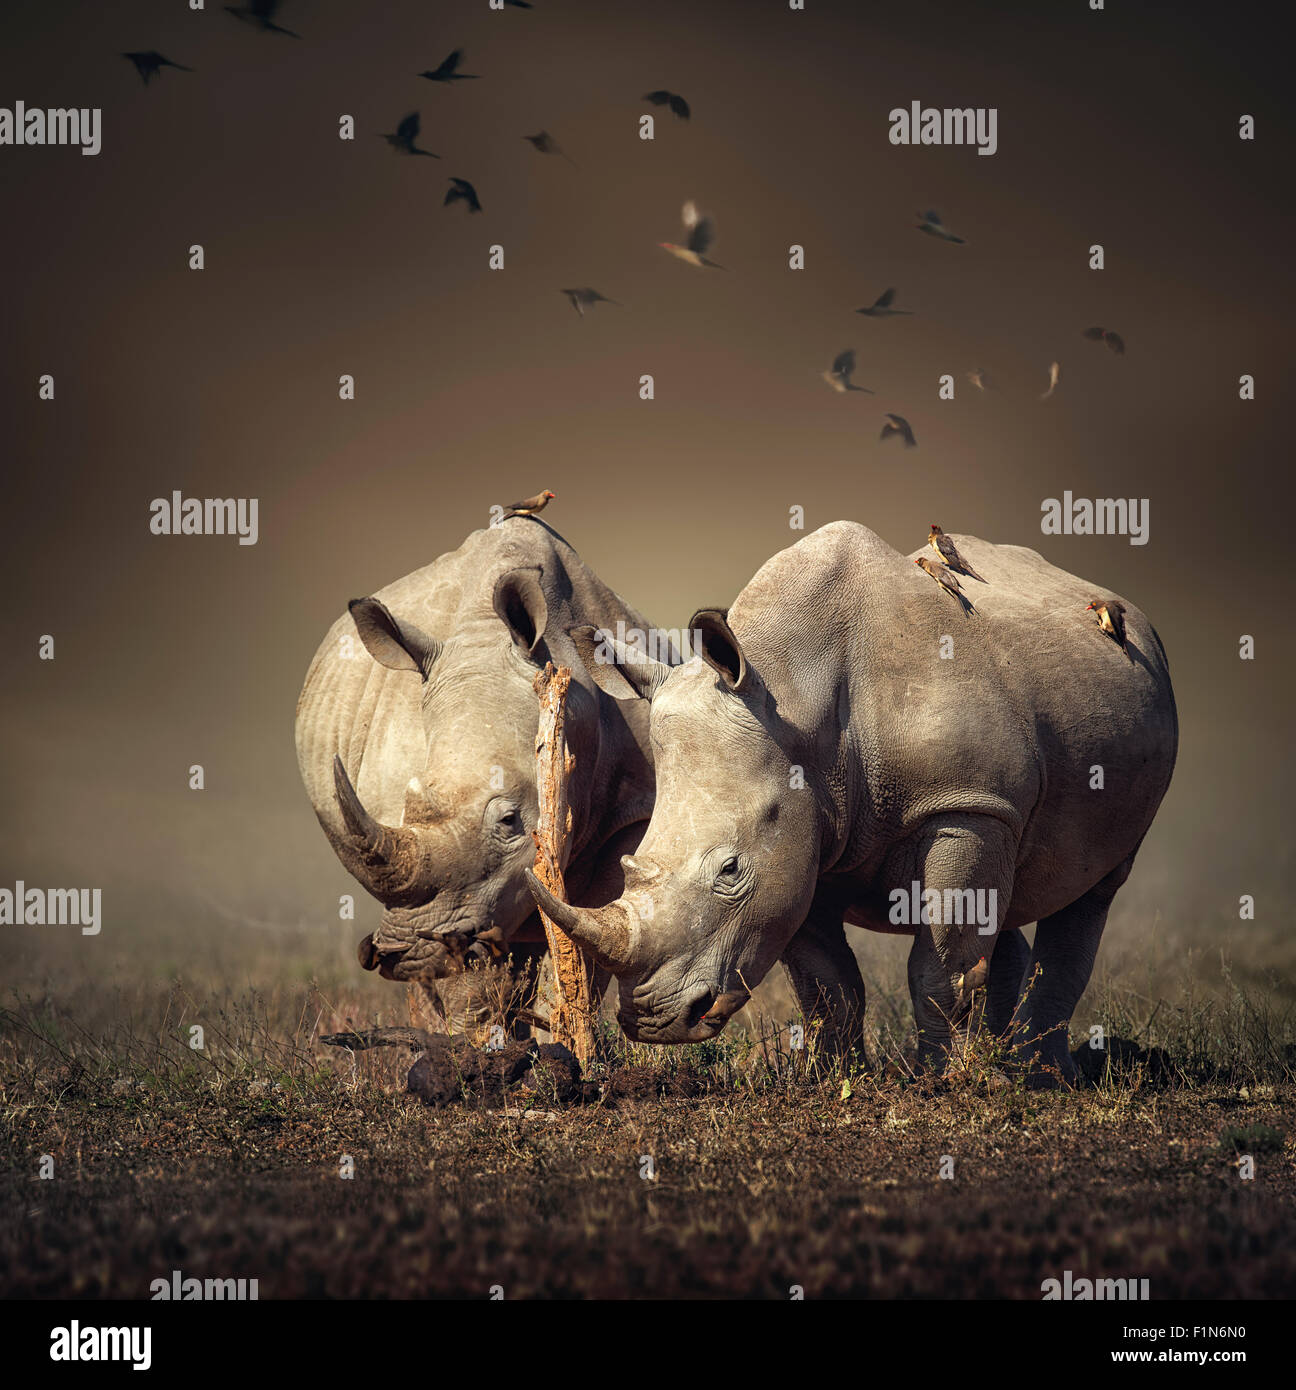 Zwei weiße Nashorn im Feld mit Vögel fliegen (digitale Kunst) Stockfoto